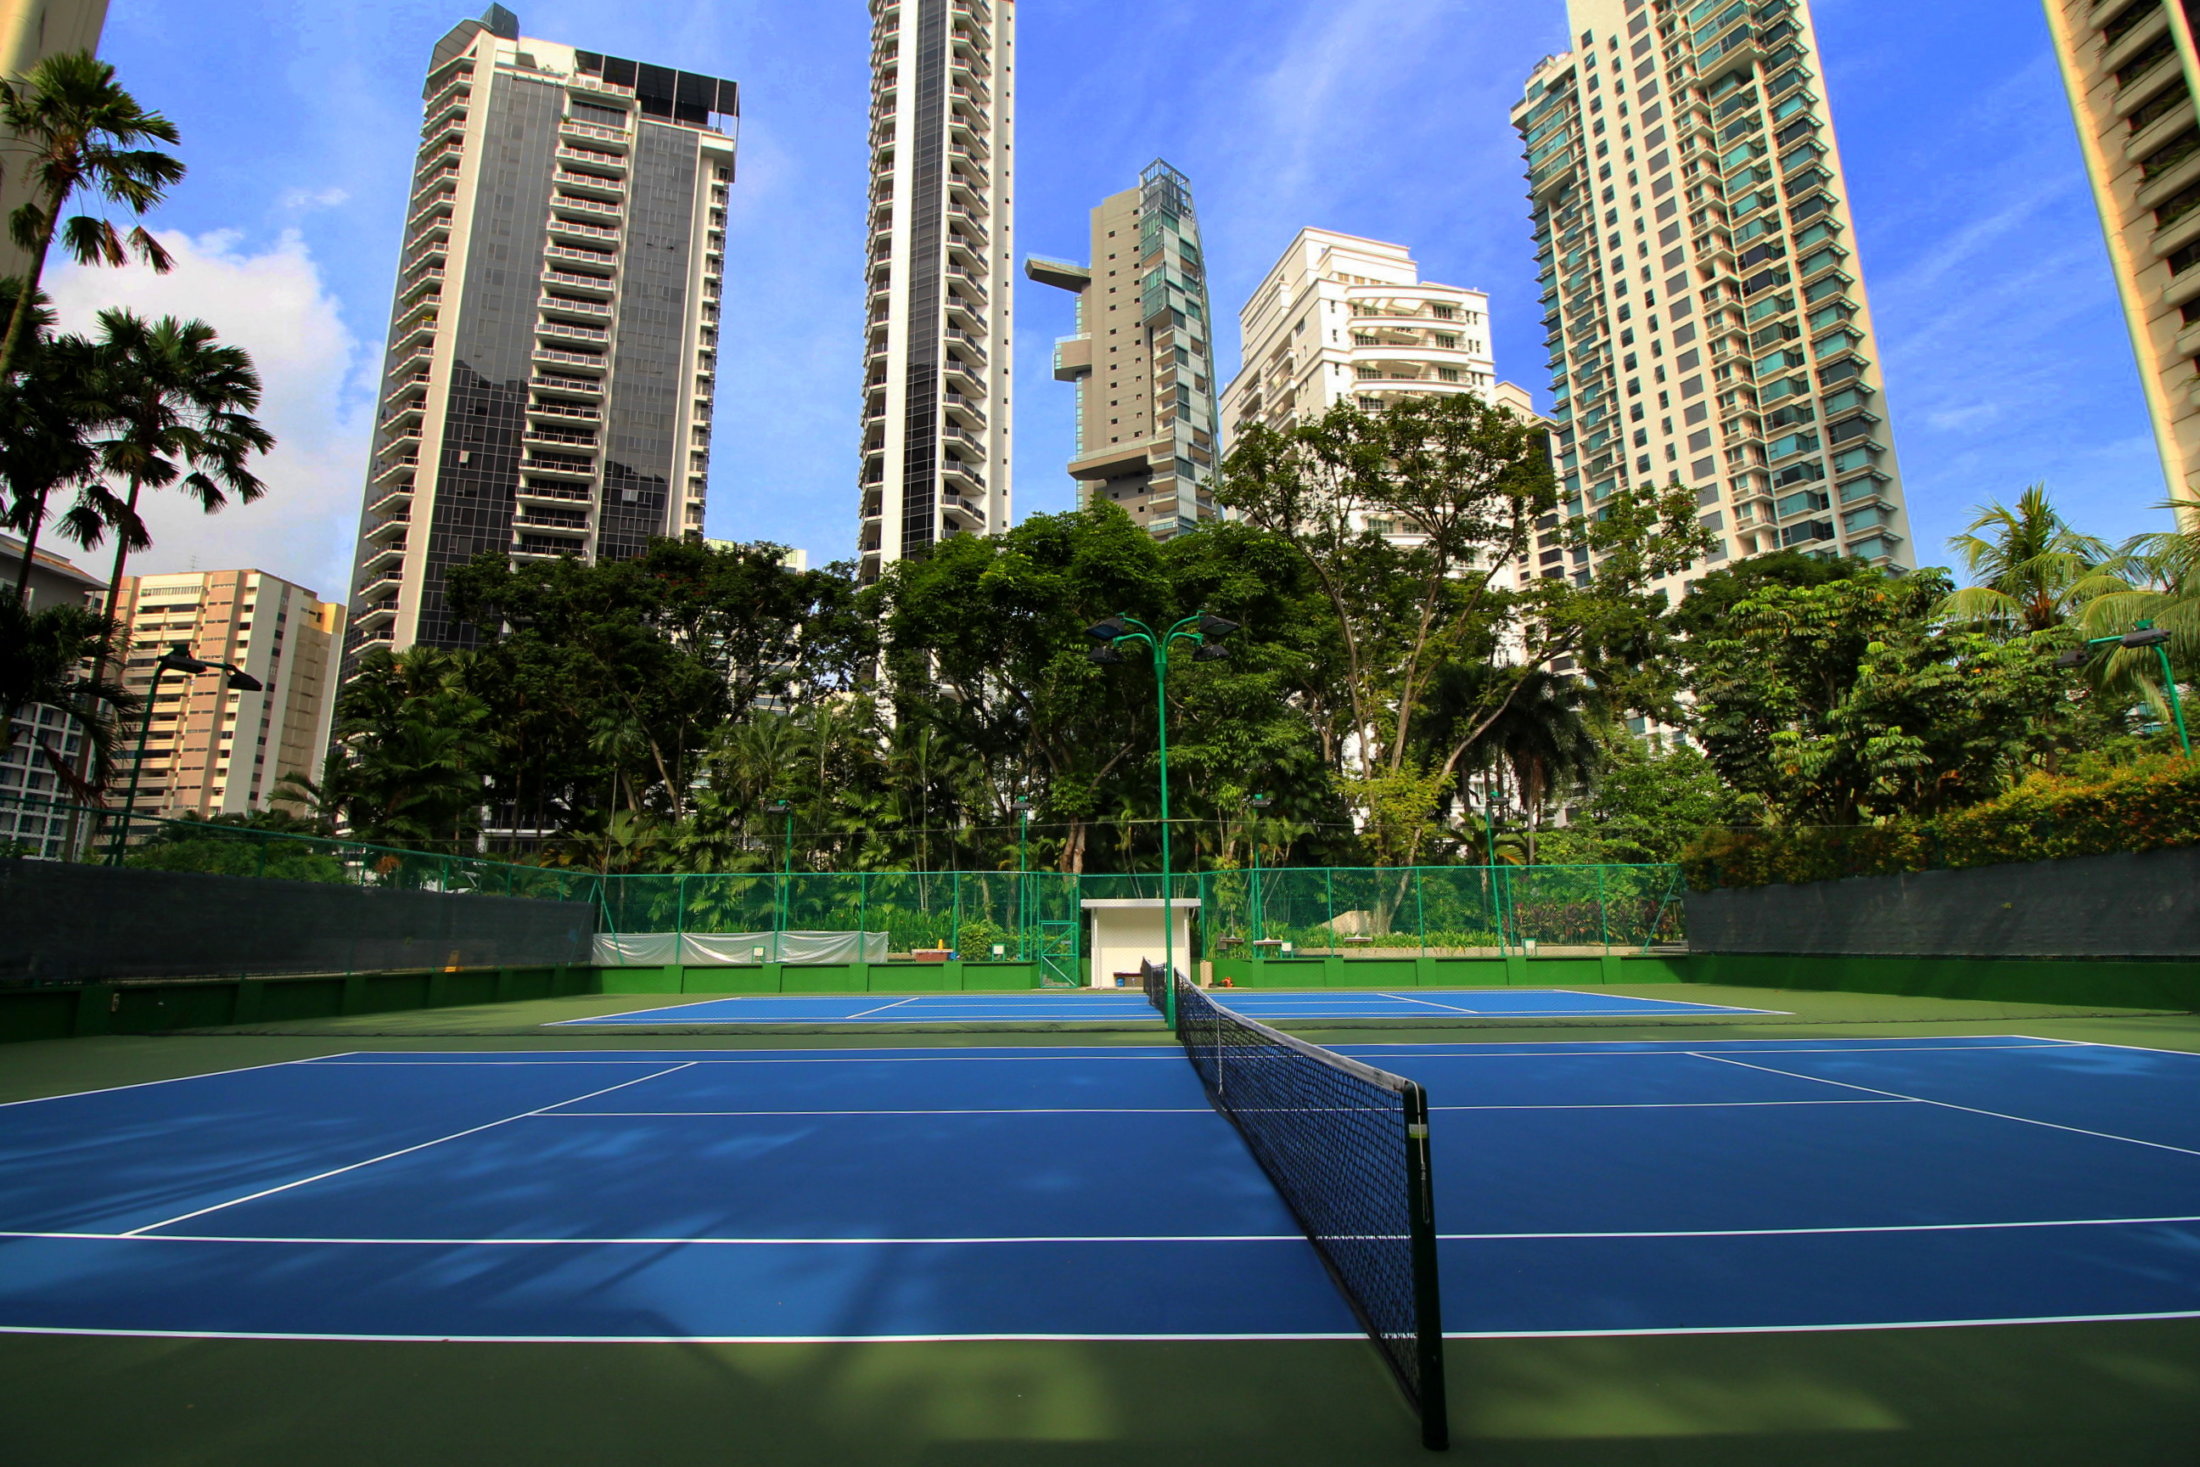 June - Tennis Courts